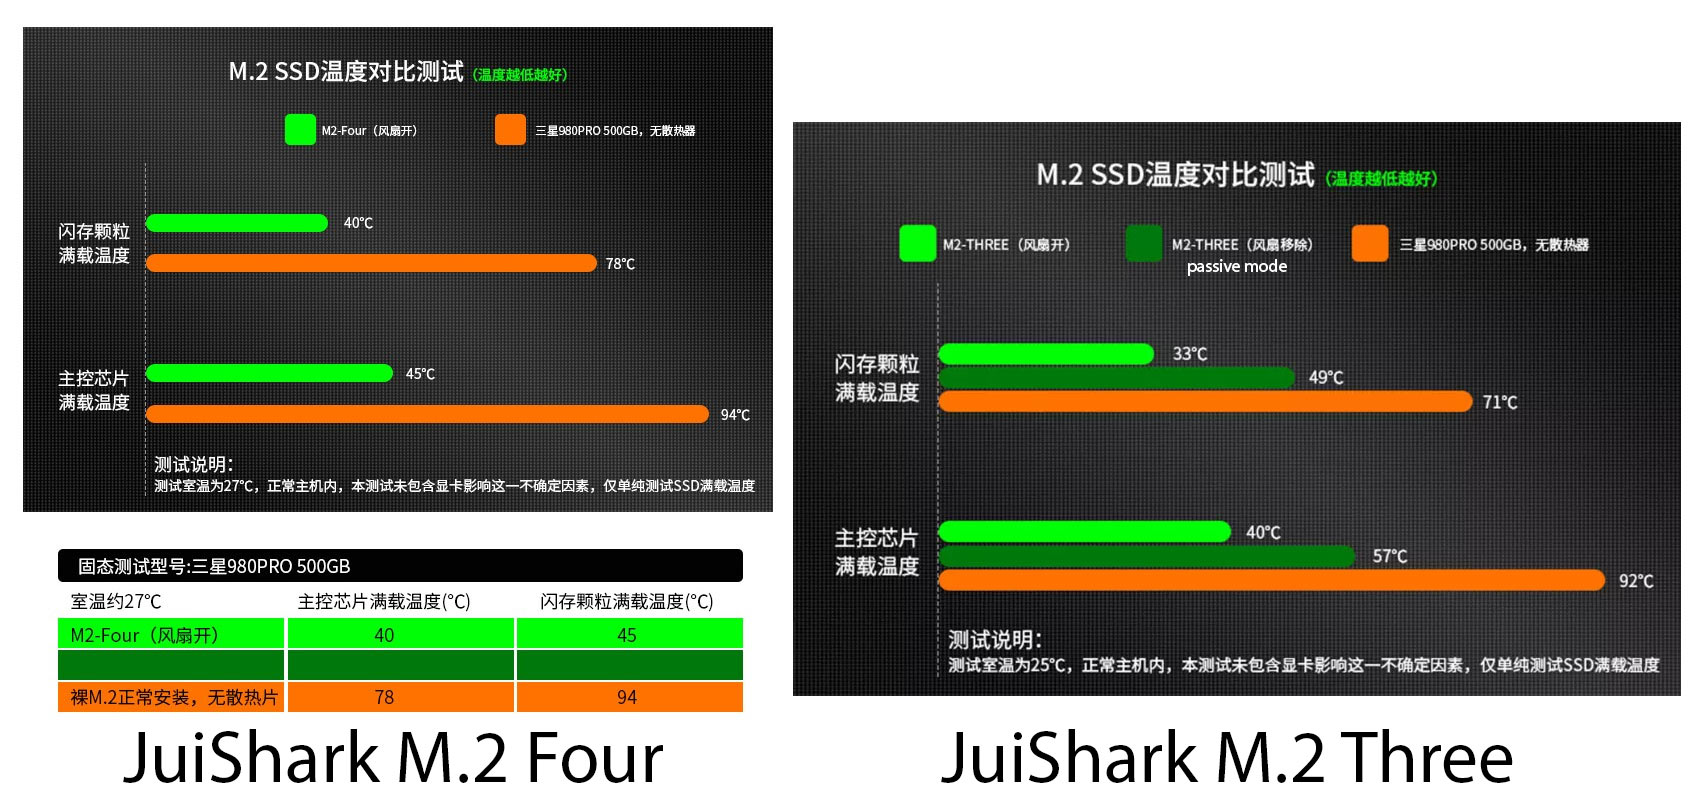 Refroidisseur JuiShark M.2 Four SSD